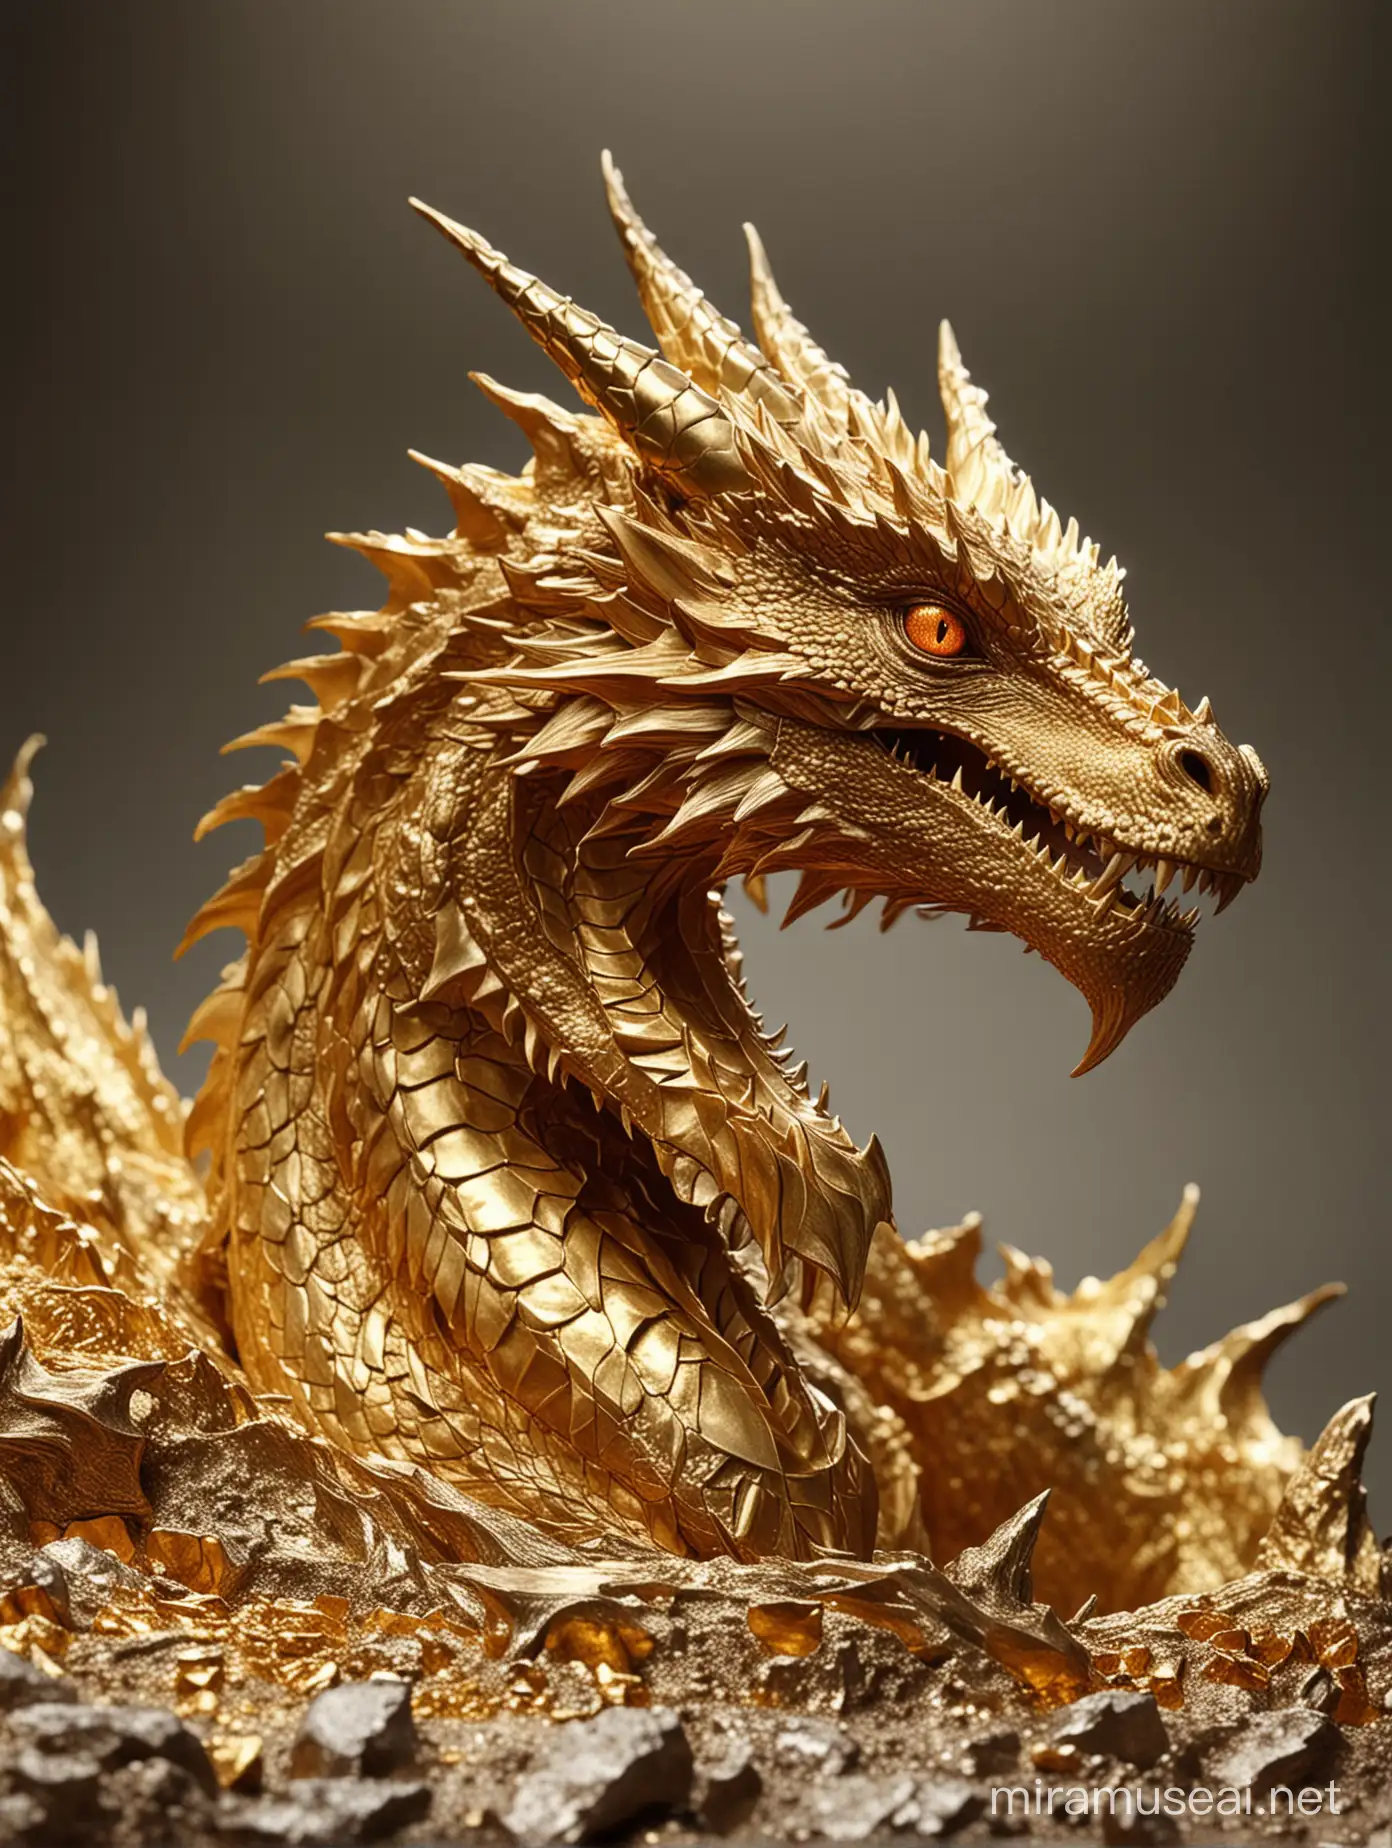 Golden Dragon Sculpture resembling Smaug